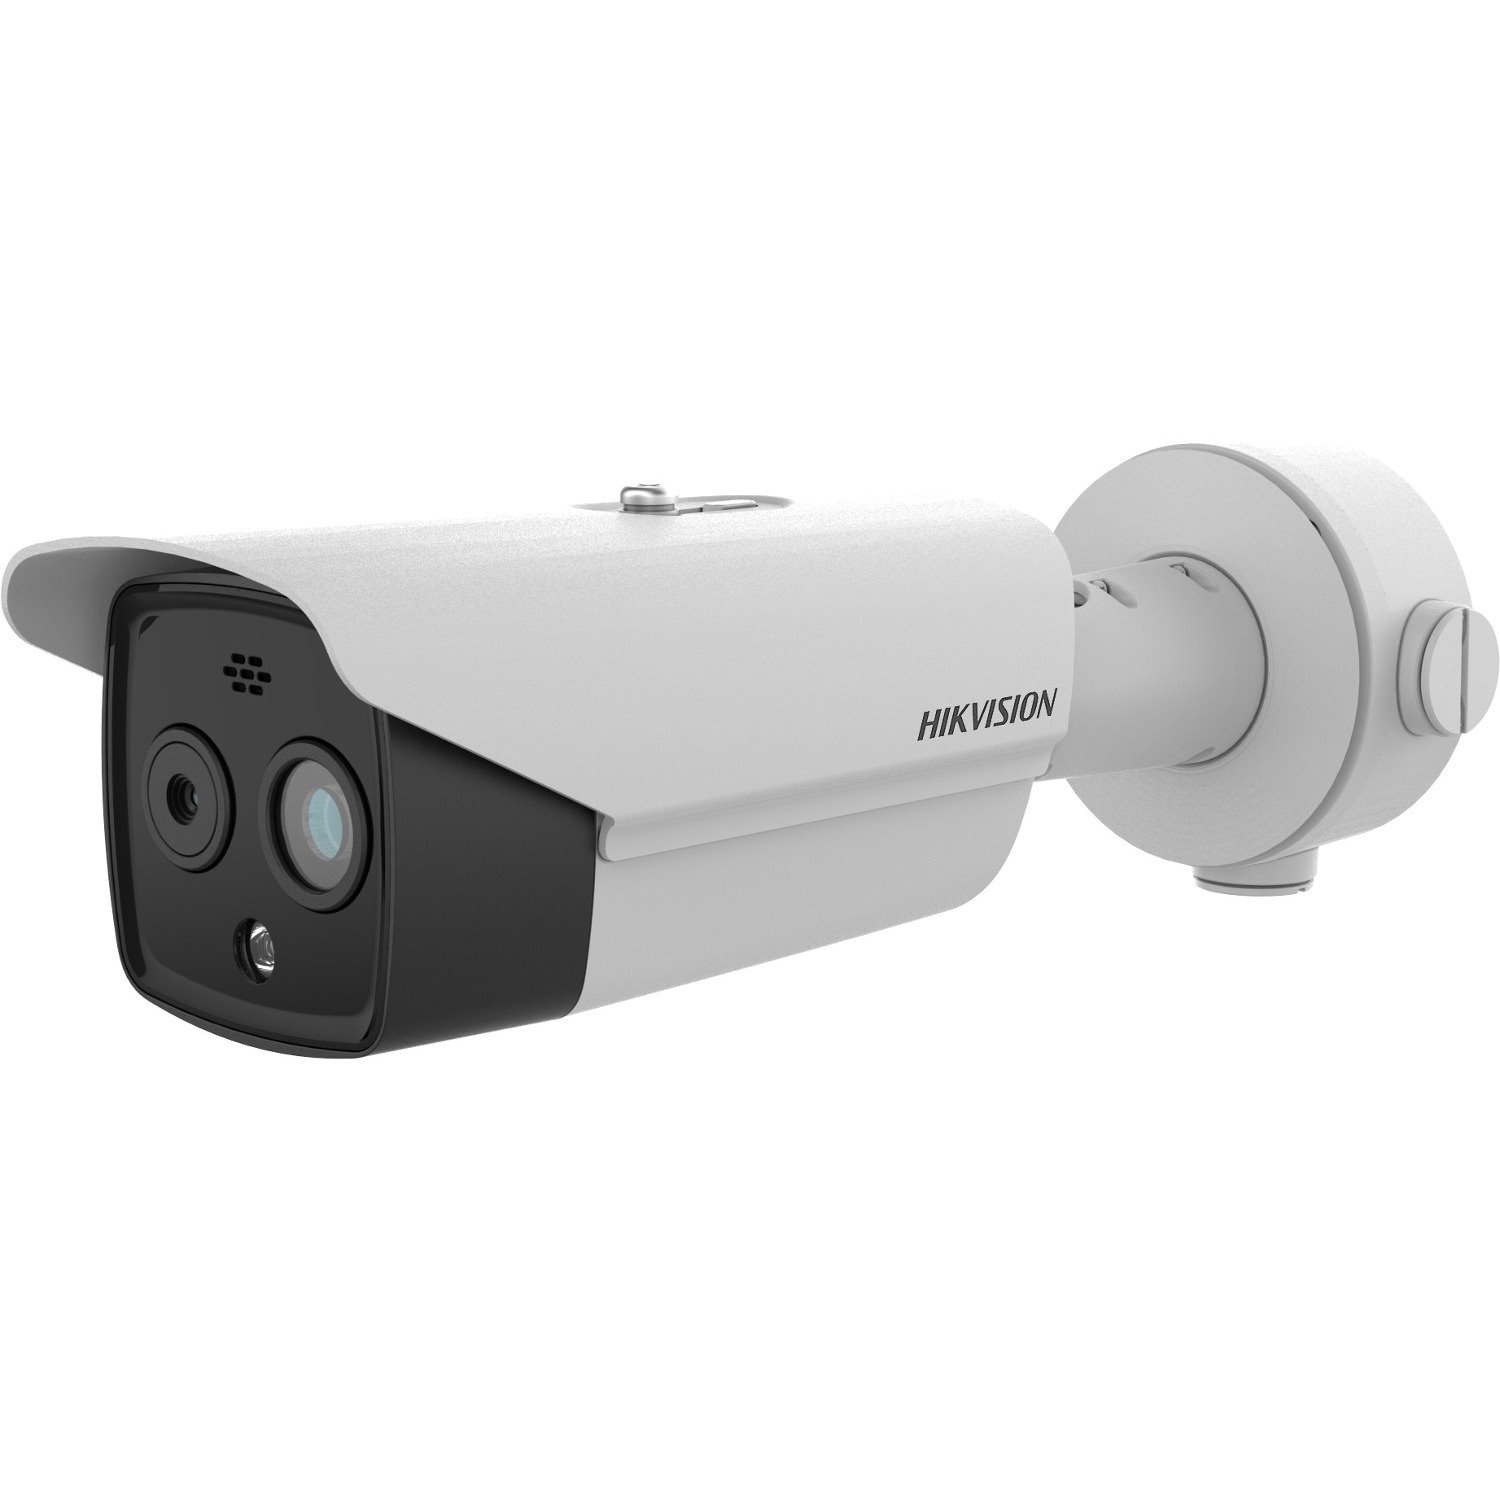 Hikvision HeatPro DS-2TD2628-3/QA Network Camera - Color - Bullet